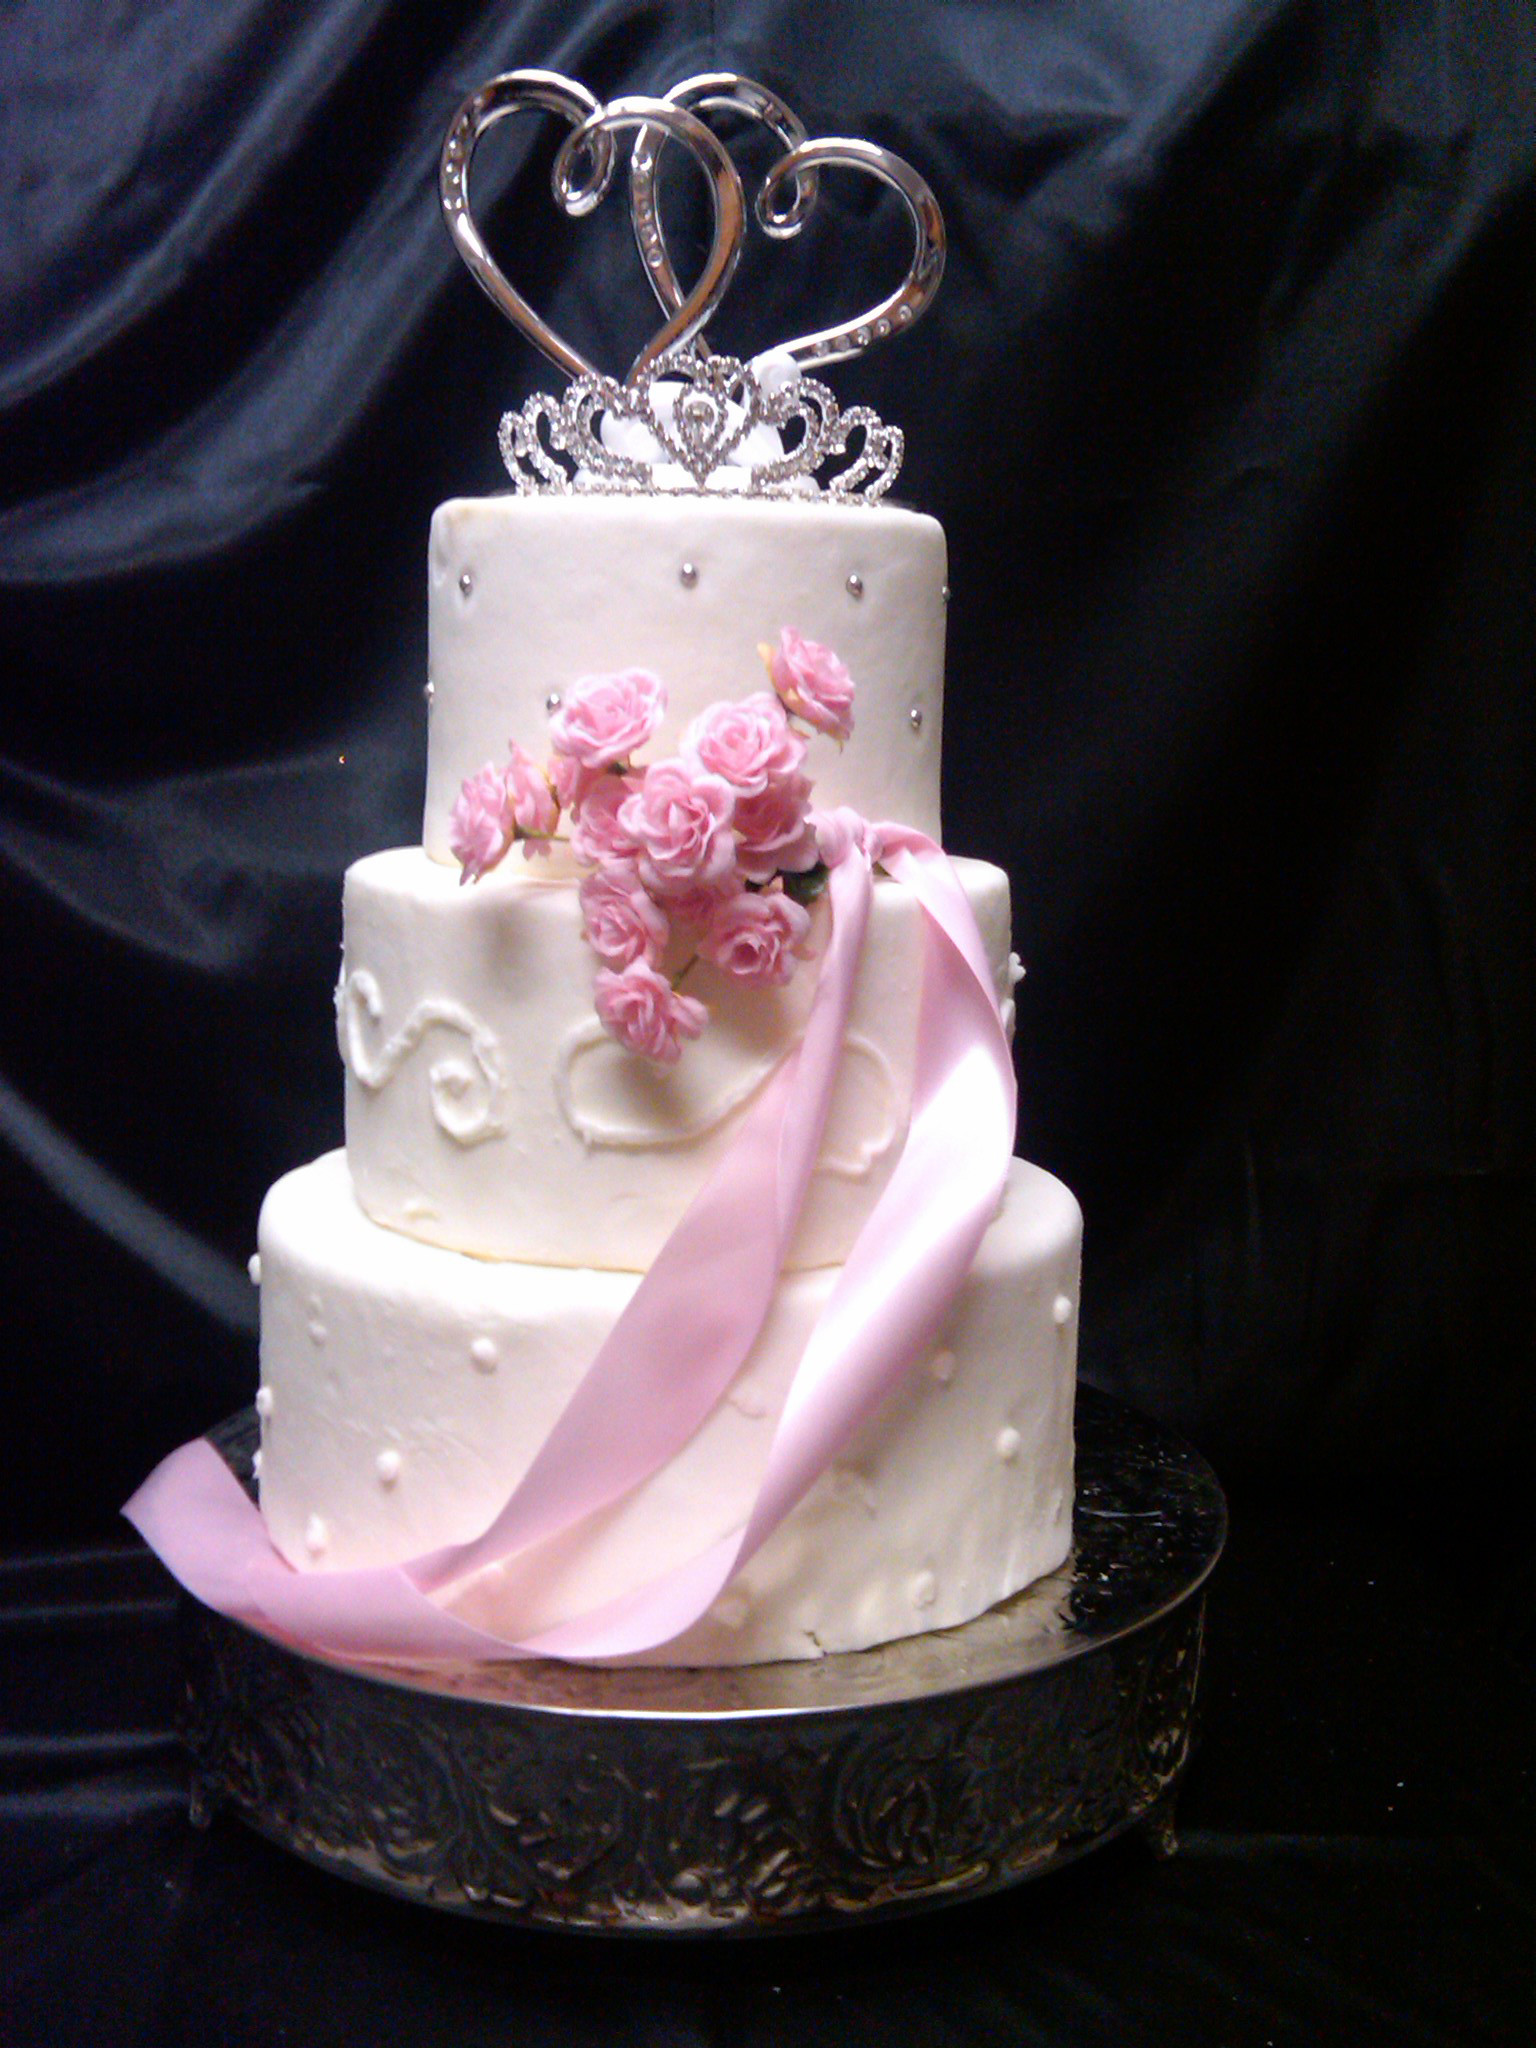 3 Tier Wedding Cakes Designs
 Most wedding cakes for you 3 tiered wedding cake designs